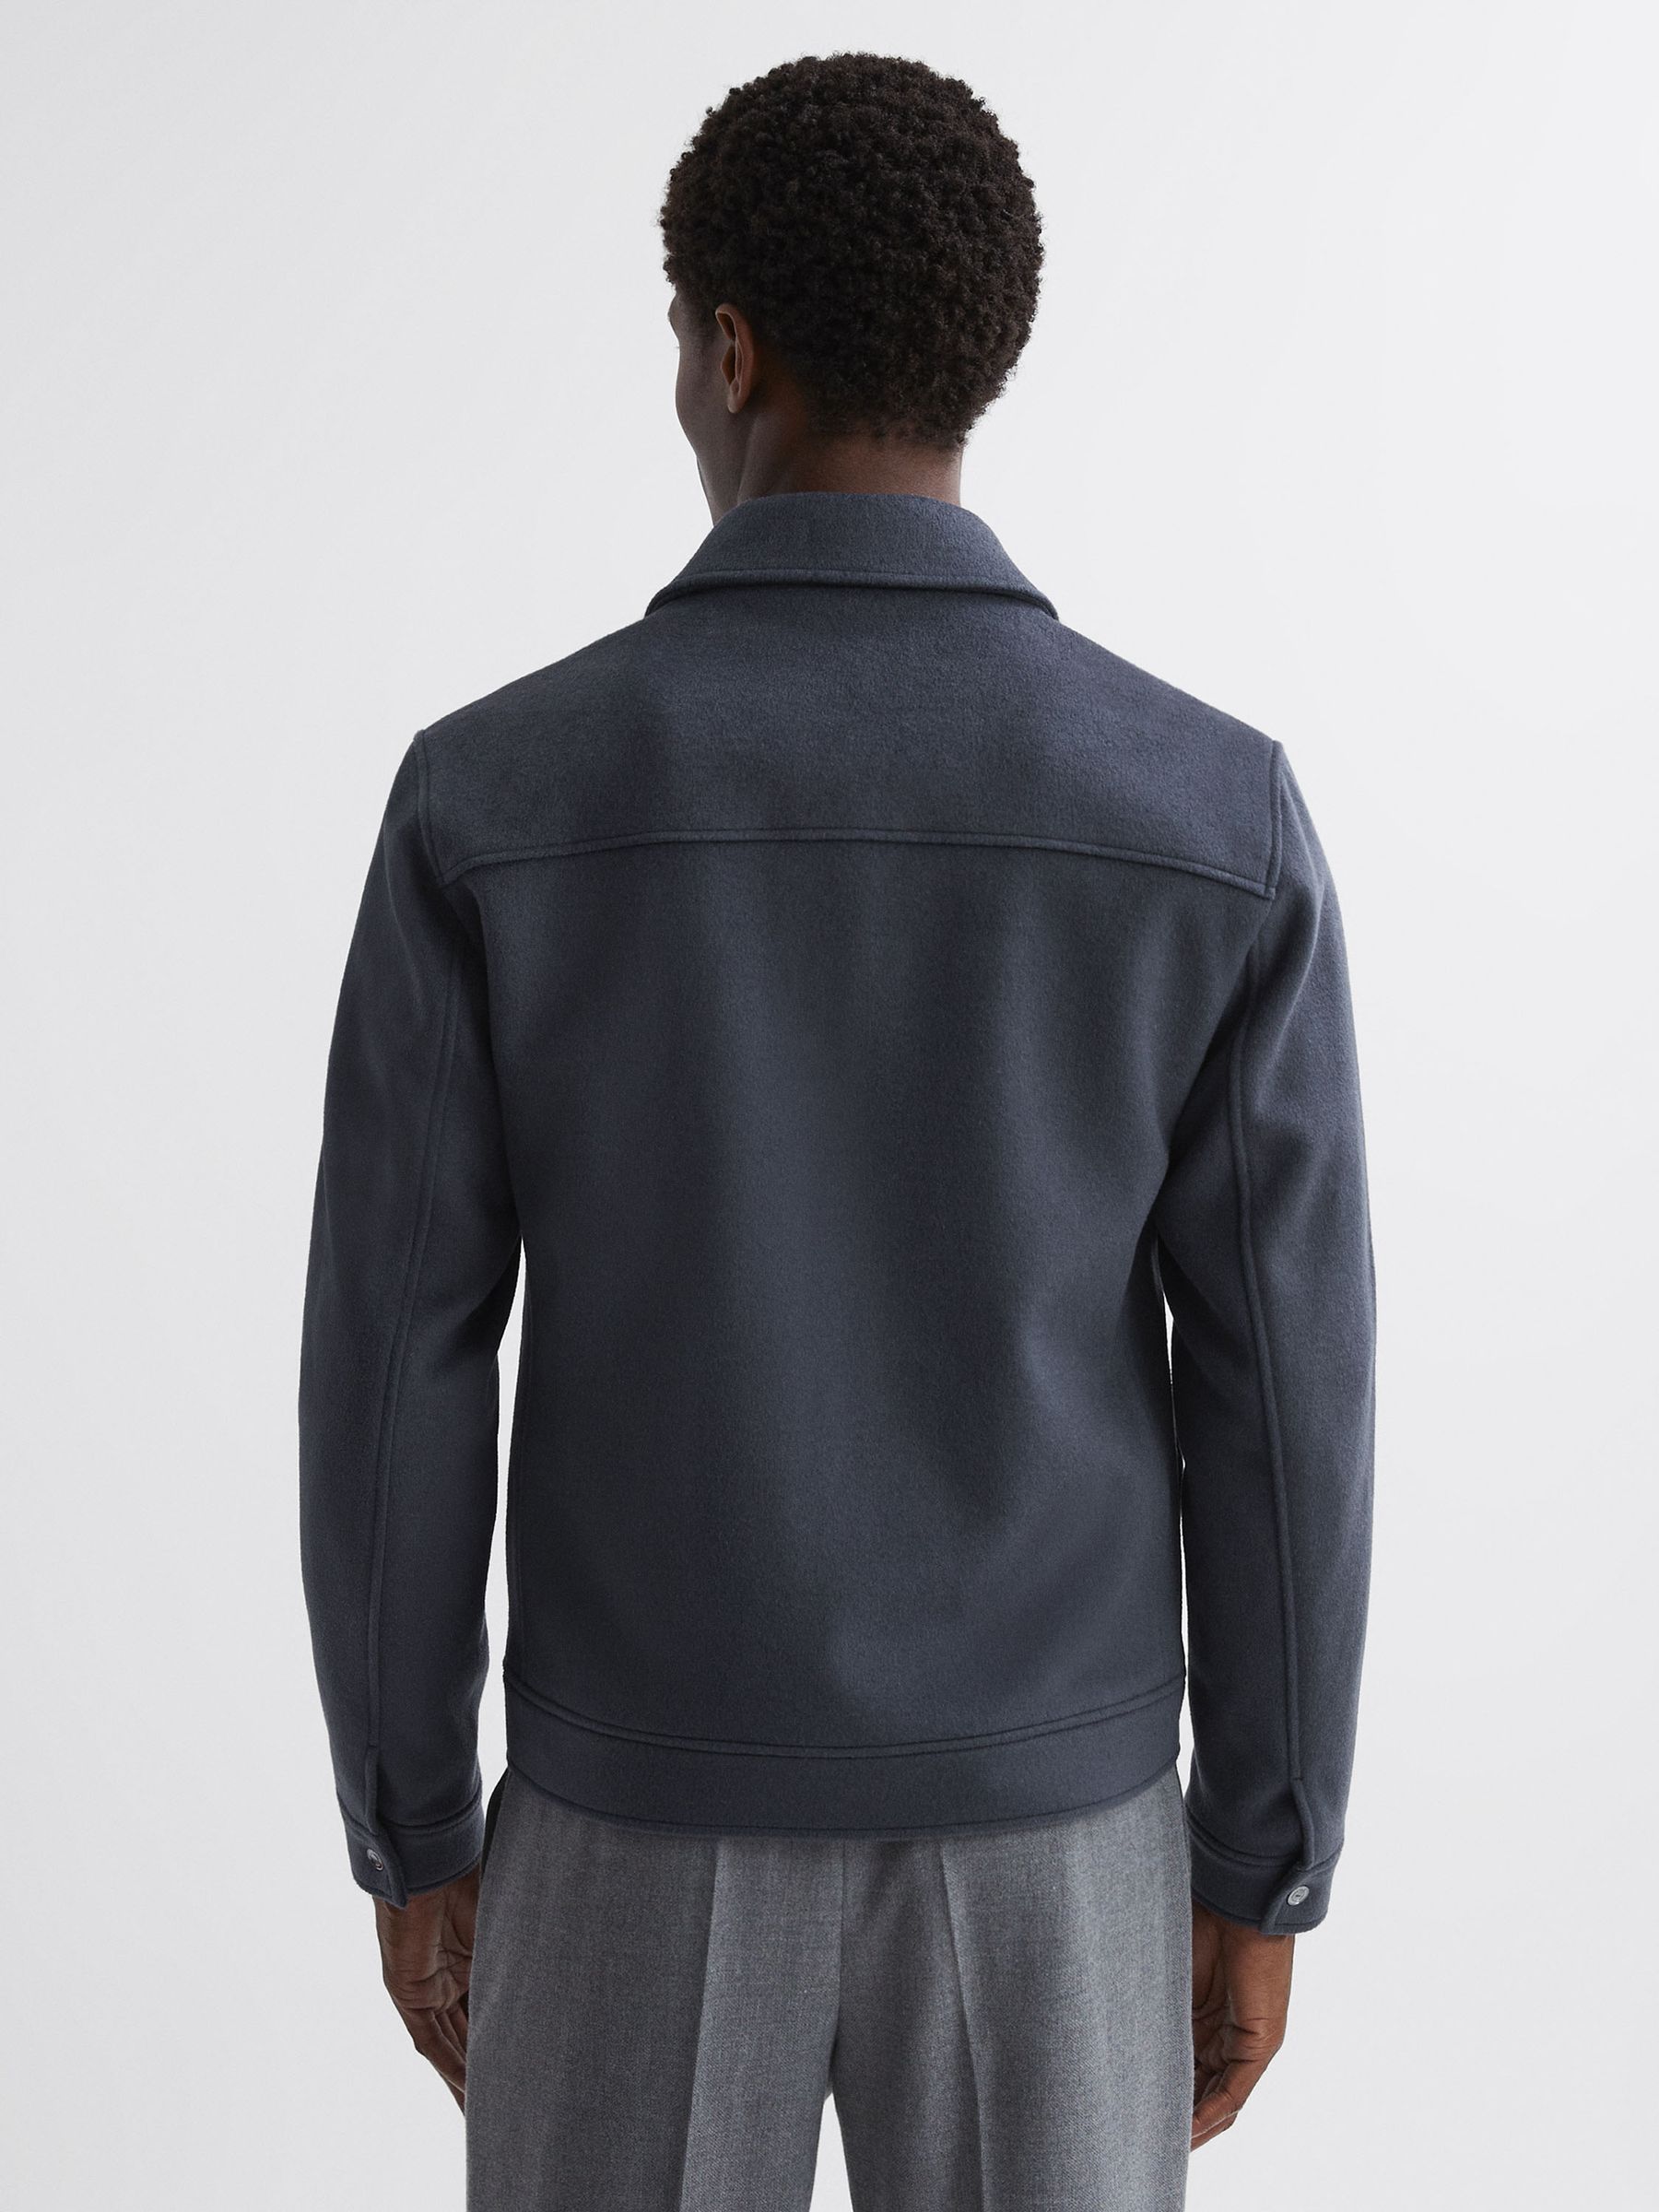 Reiss Peridoe Wool Zip Through Jacket | REISS USA